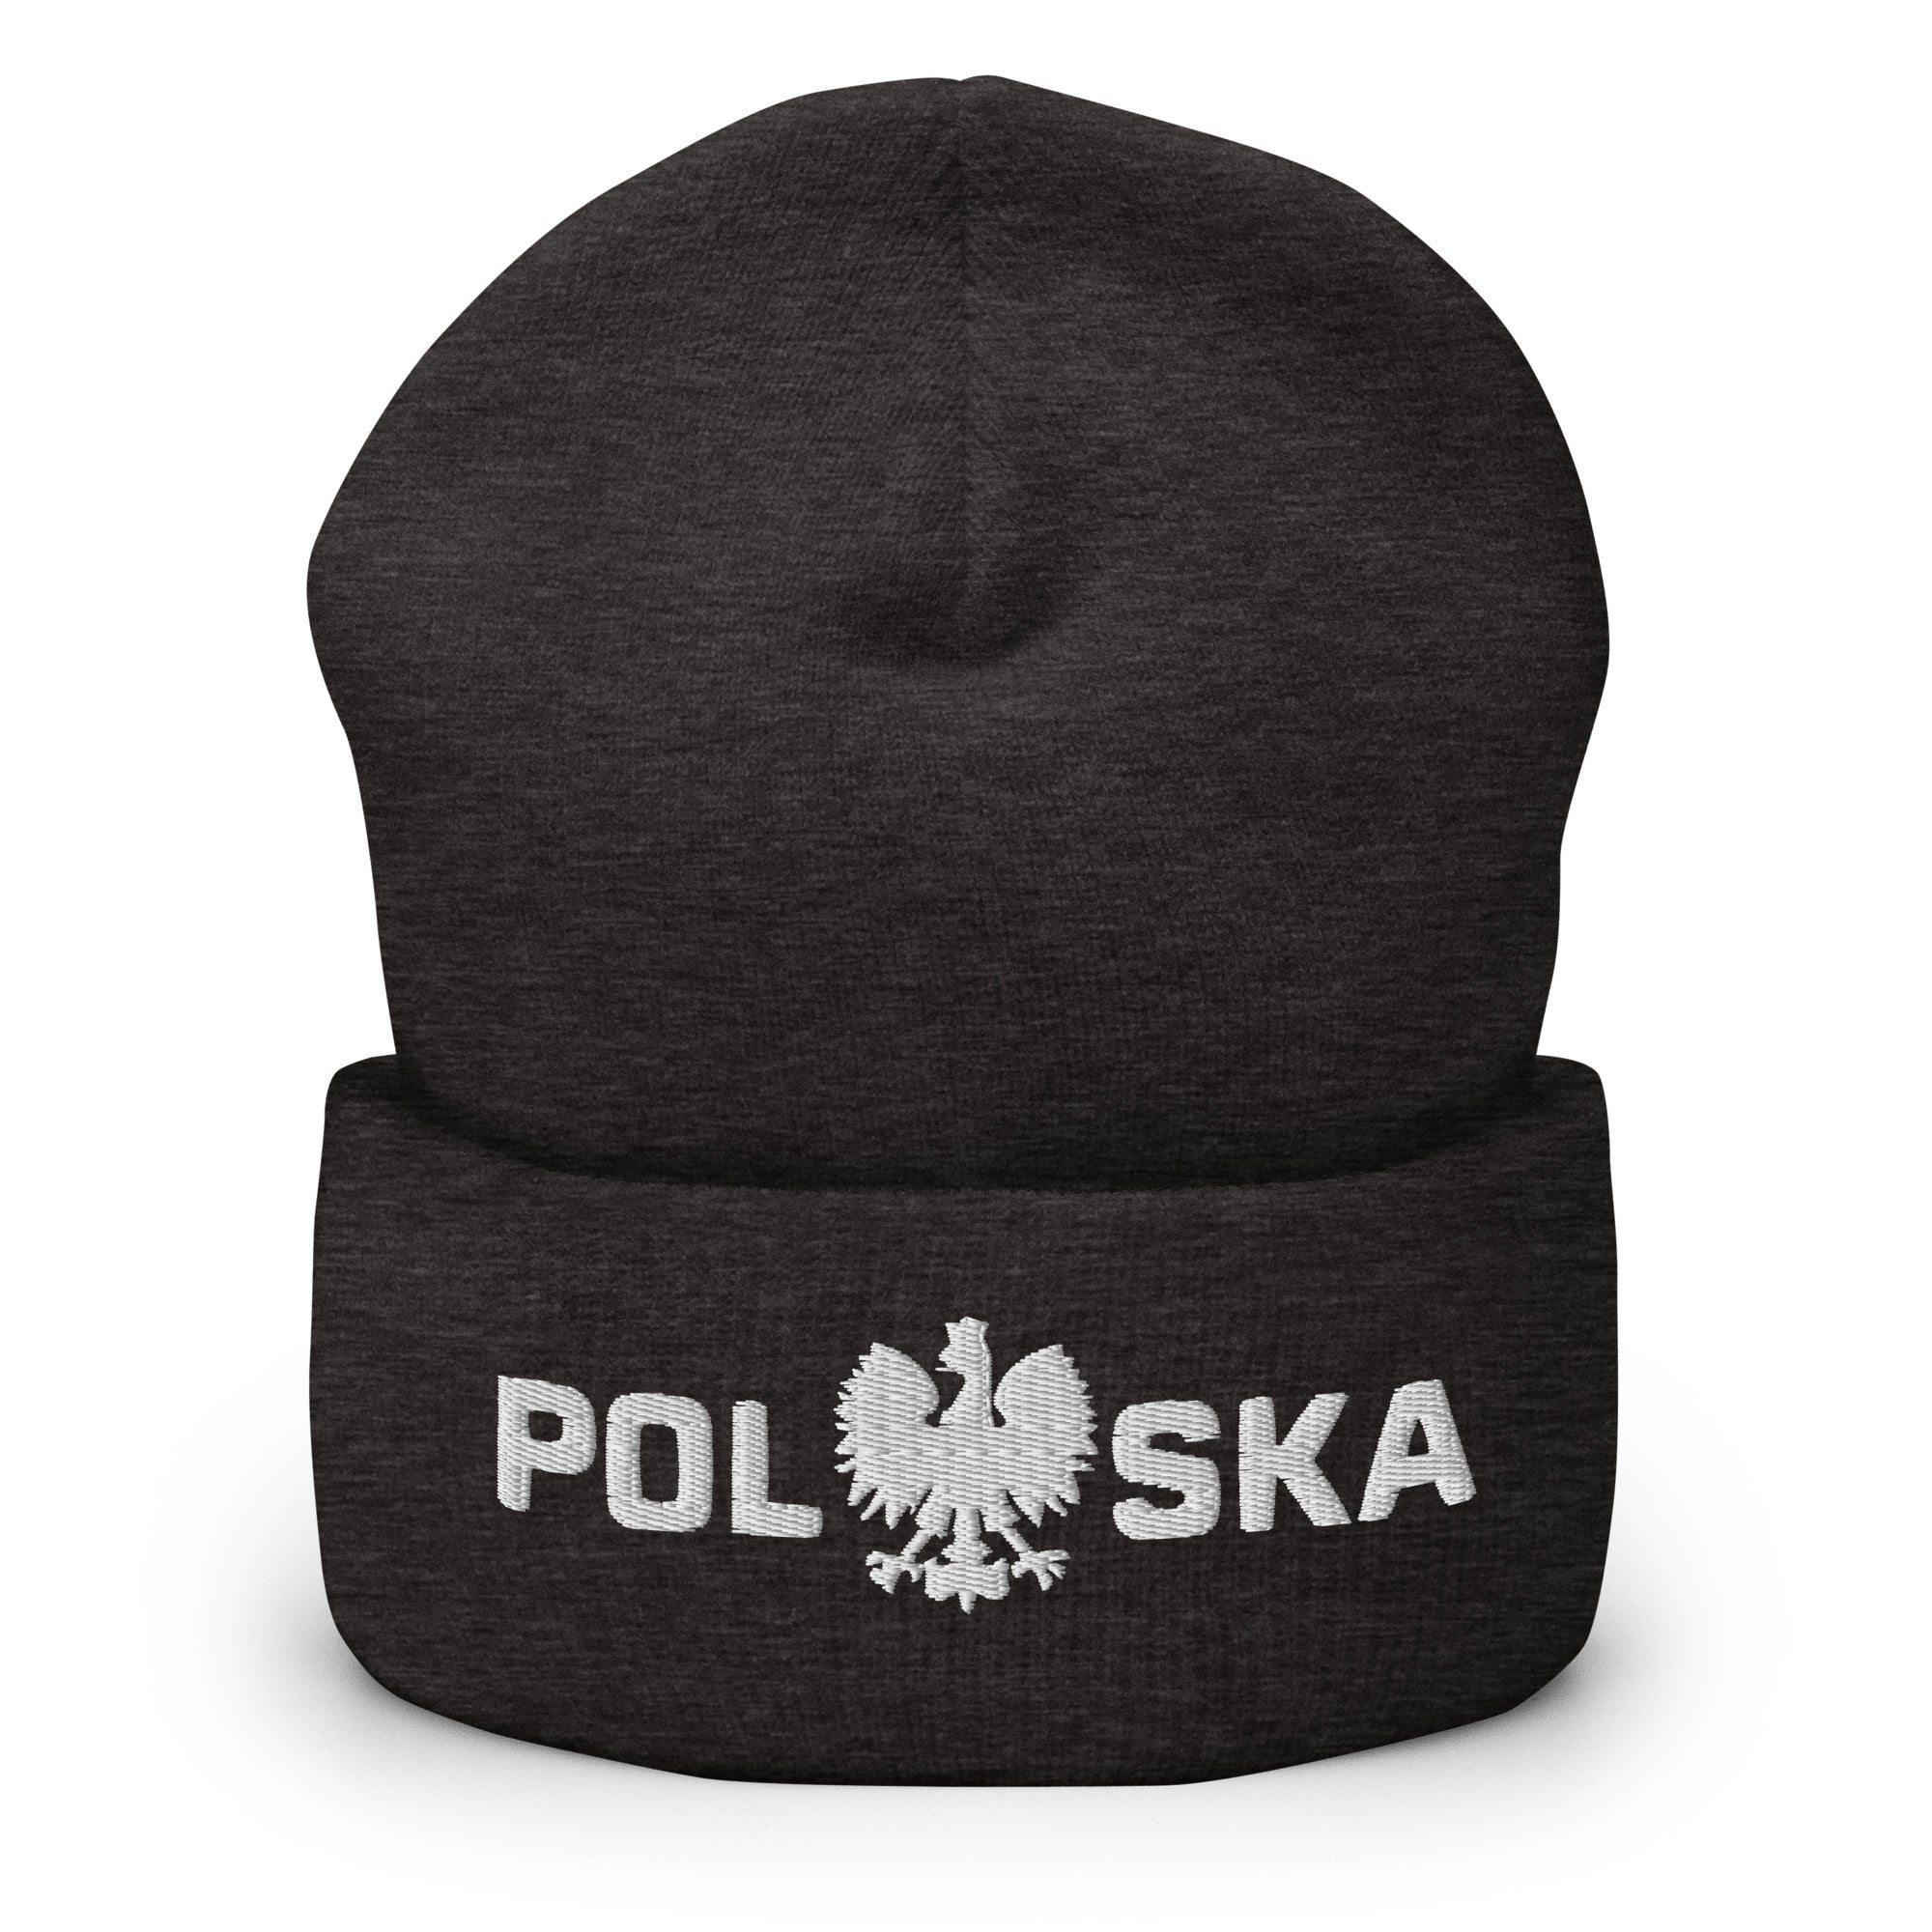 Polska Thick Lettering Cuffed Beanie  Polish Shirt Store Dark Grey  